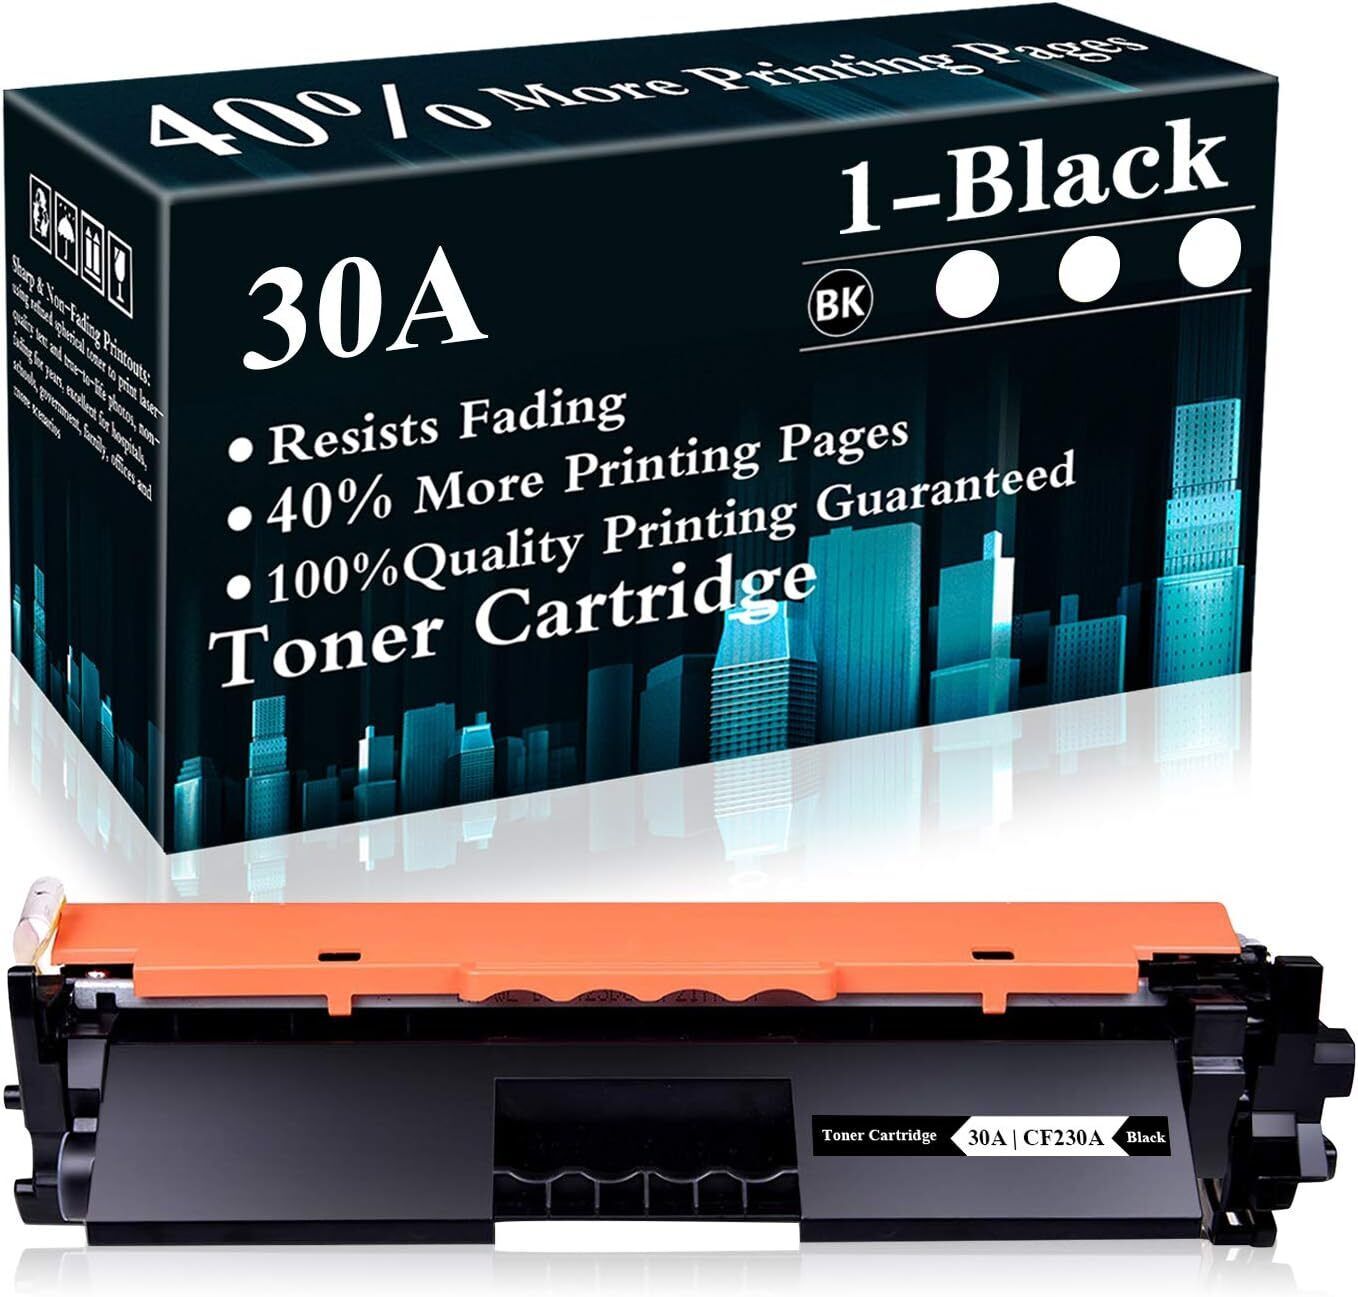 30A Black Toner Cartridge Replacement for Pro M203dn M203dw M203d MFP M227sdn